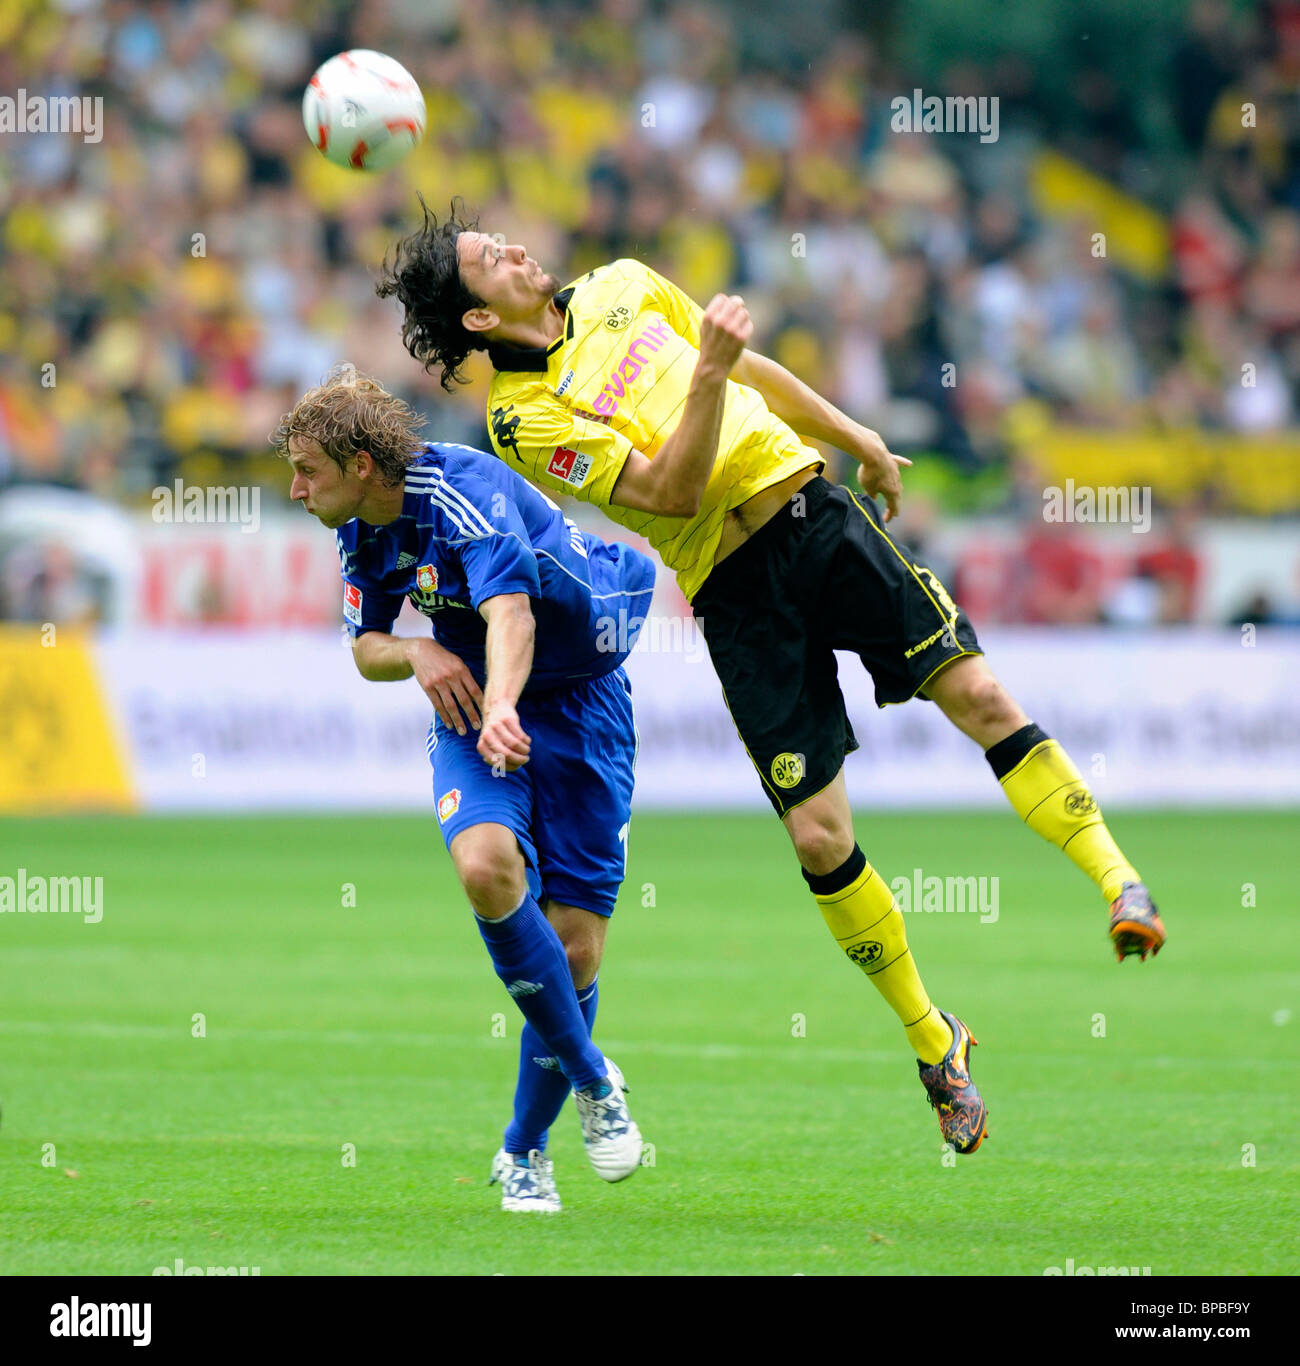 Stefan Kiessling (blau) Vs Neven Subotic, Deutsche Bundesliga. Stockfoto